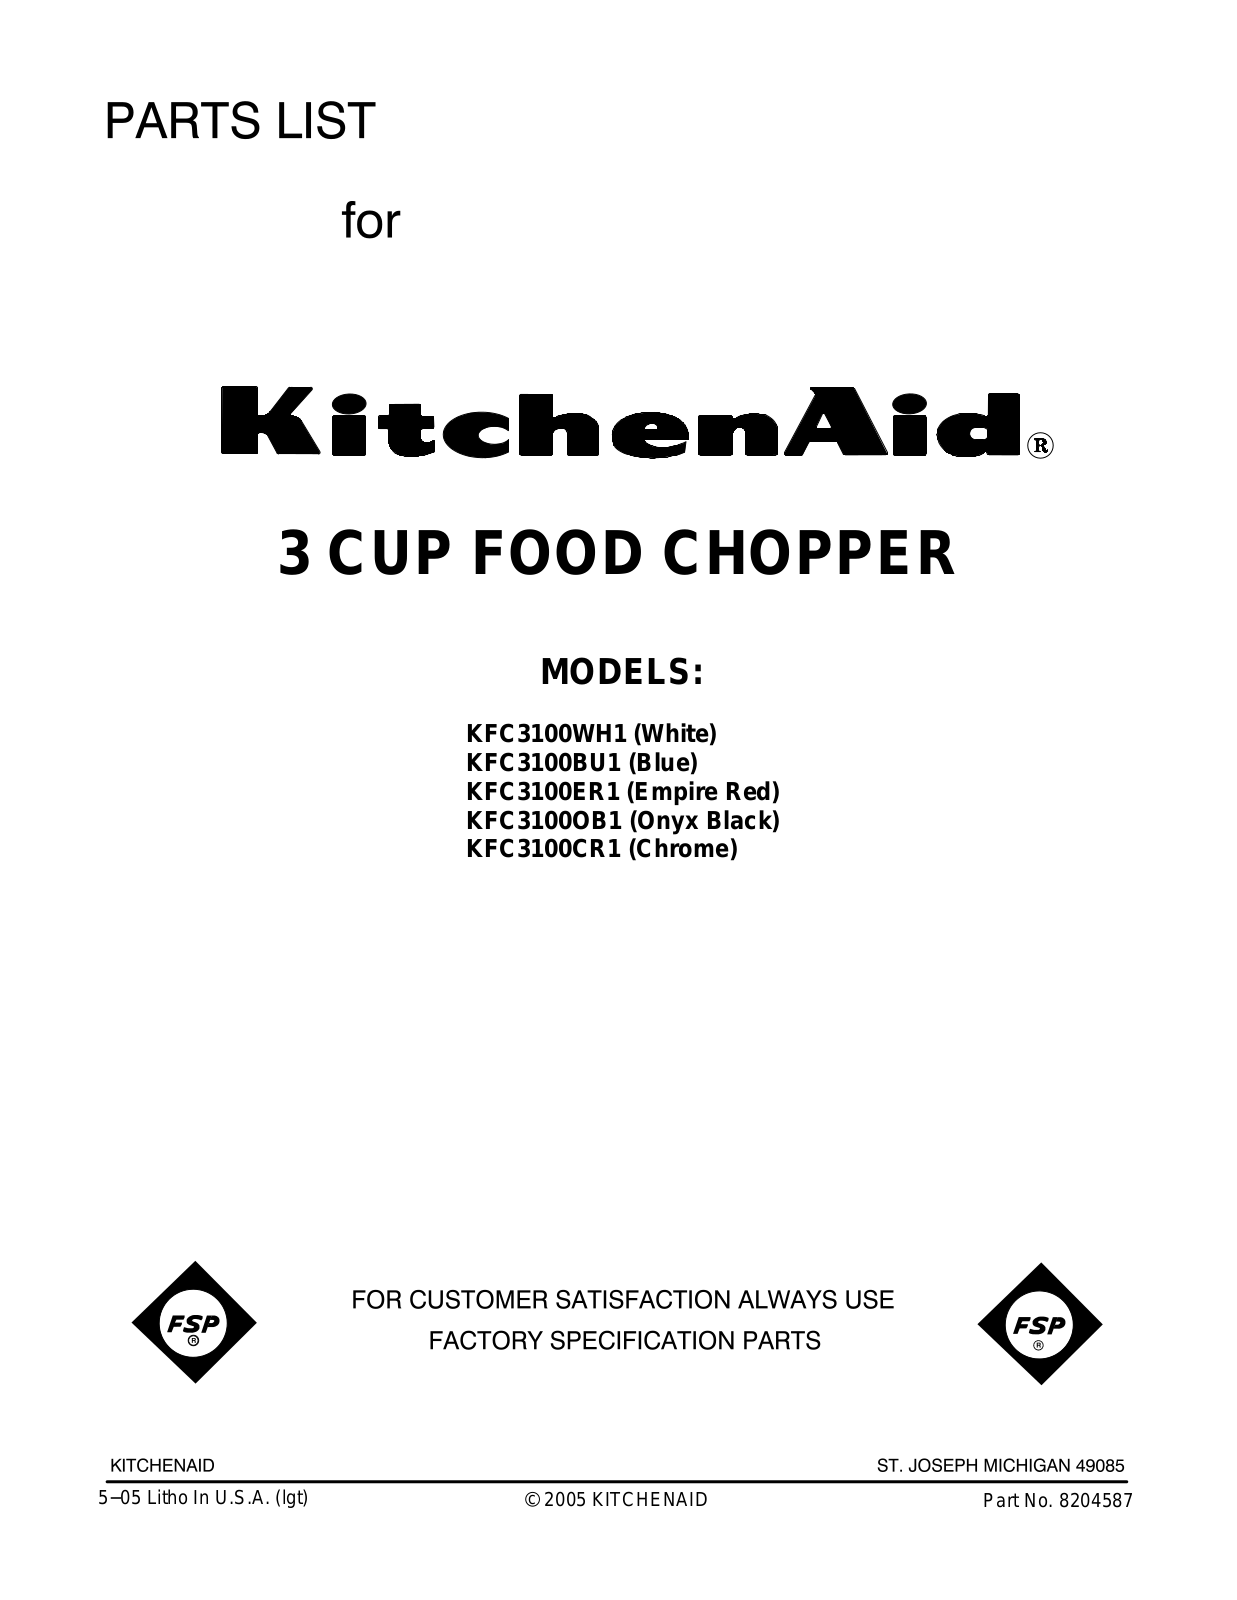 KitchenAid KFC3100OB1, KFC3100WH1, KFC3100CR1, KFC3100ER1, KFC3100BU1 User Manual